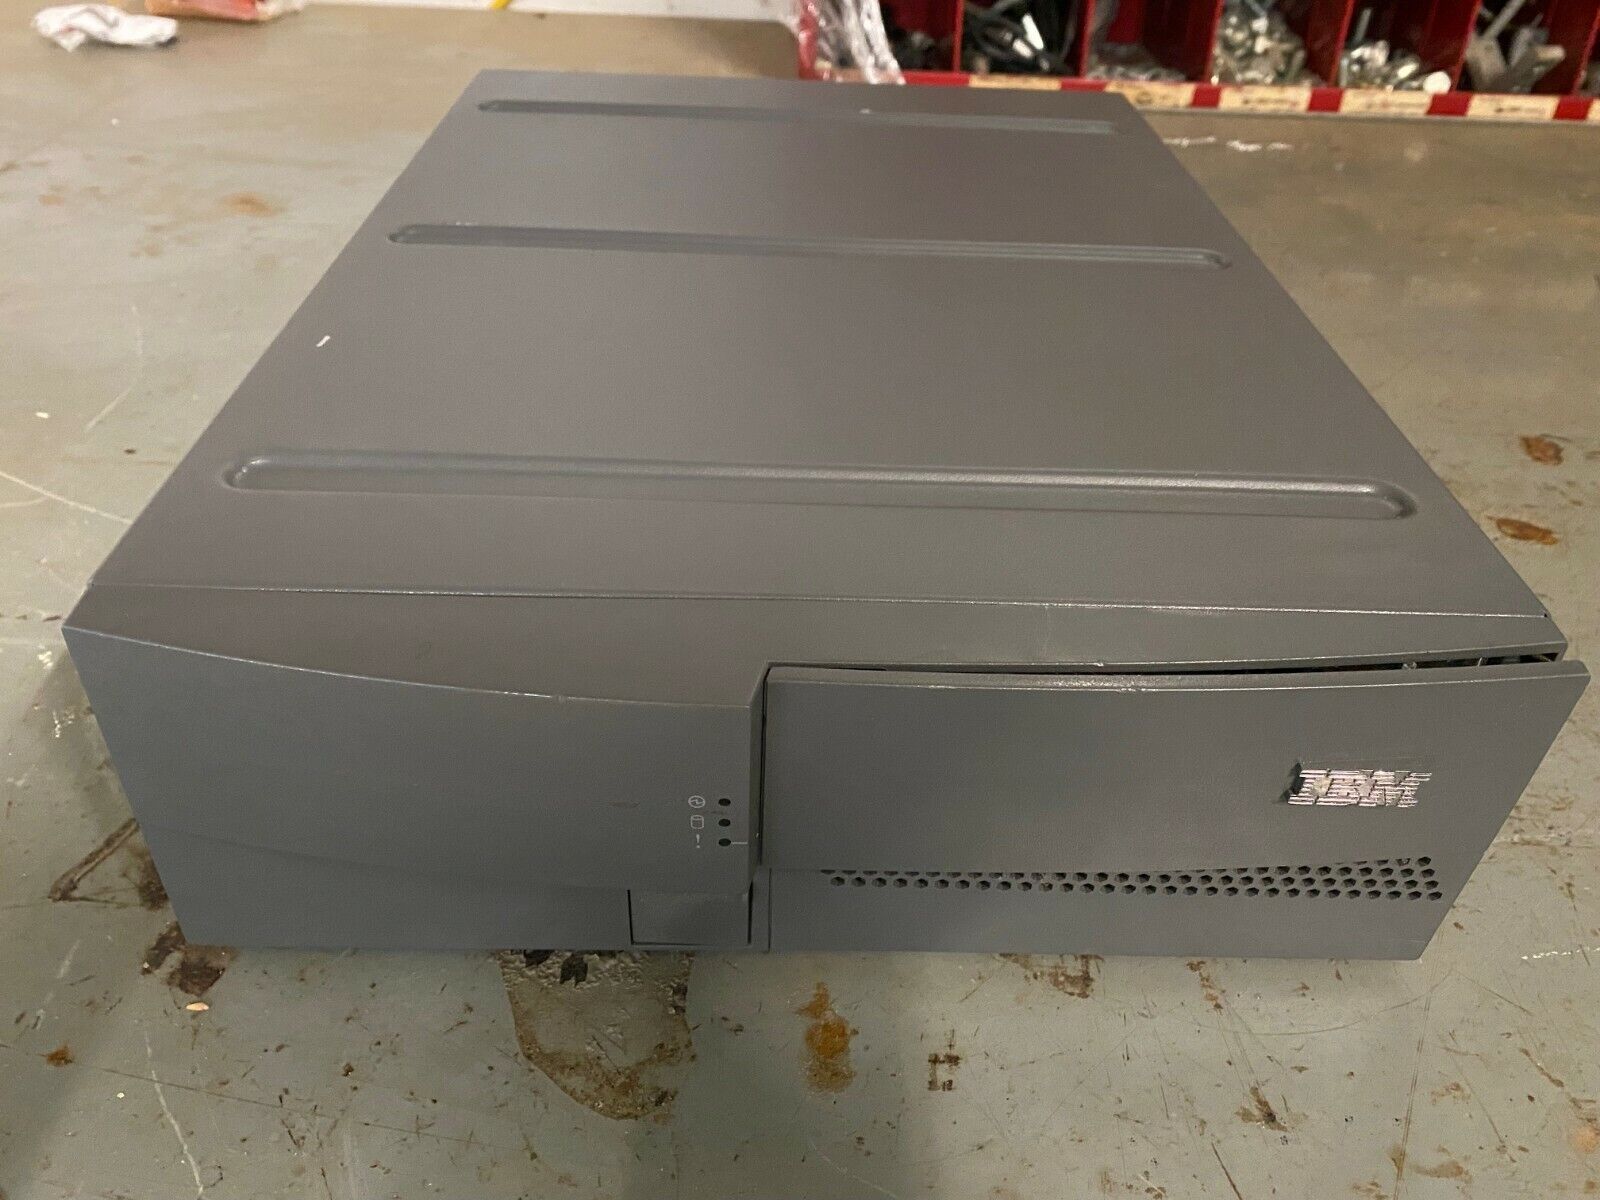 IBM 4900-745 Terminal Compact Gray POS Computer Register Desktop PC